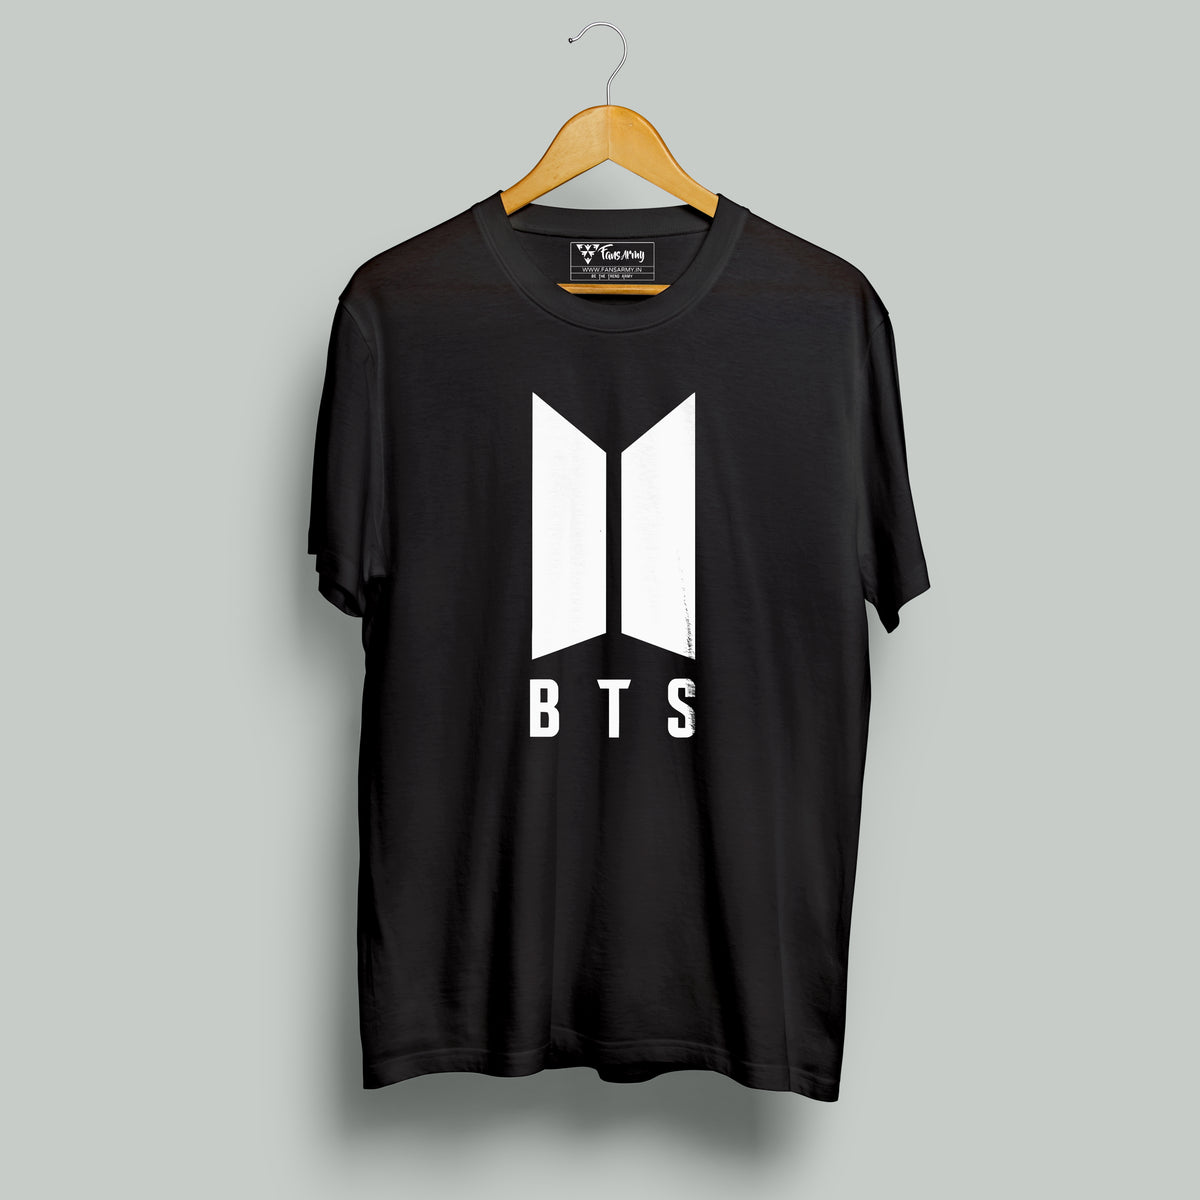 Shop BTS Logo Tshirt and BTS Merchandise Online India – Fans Army